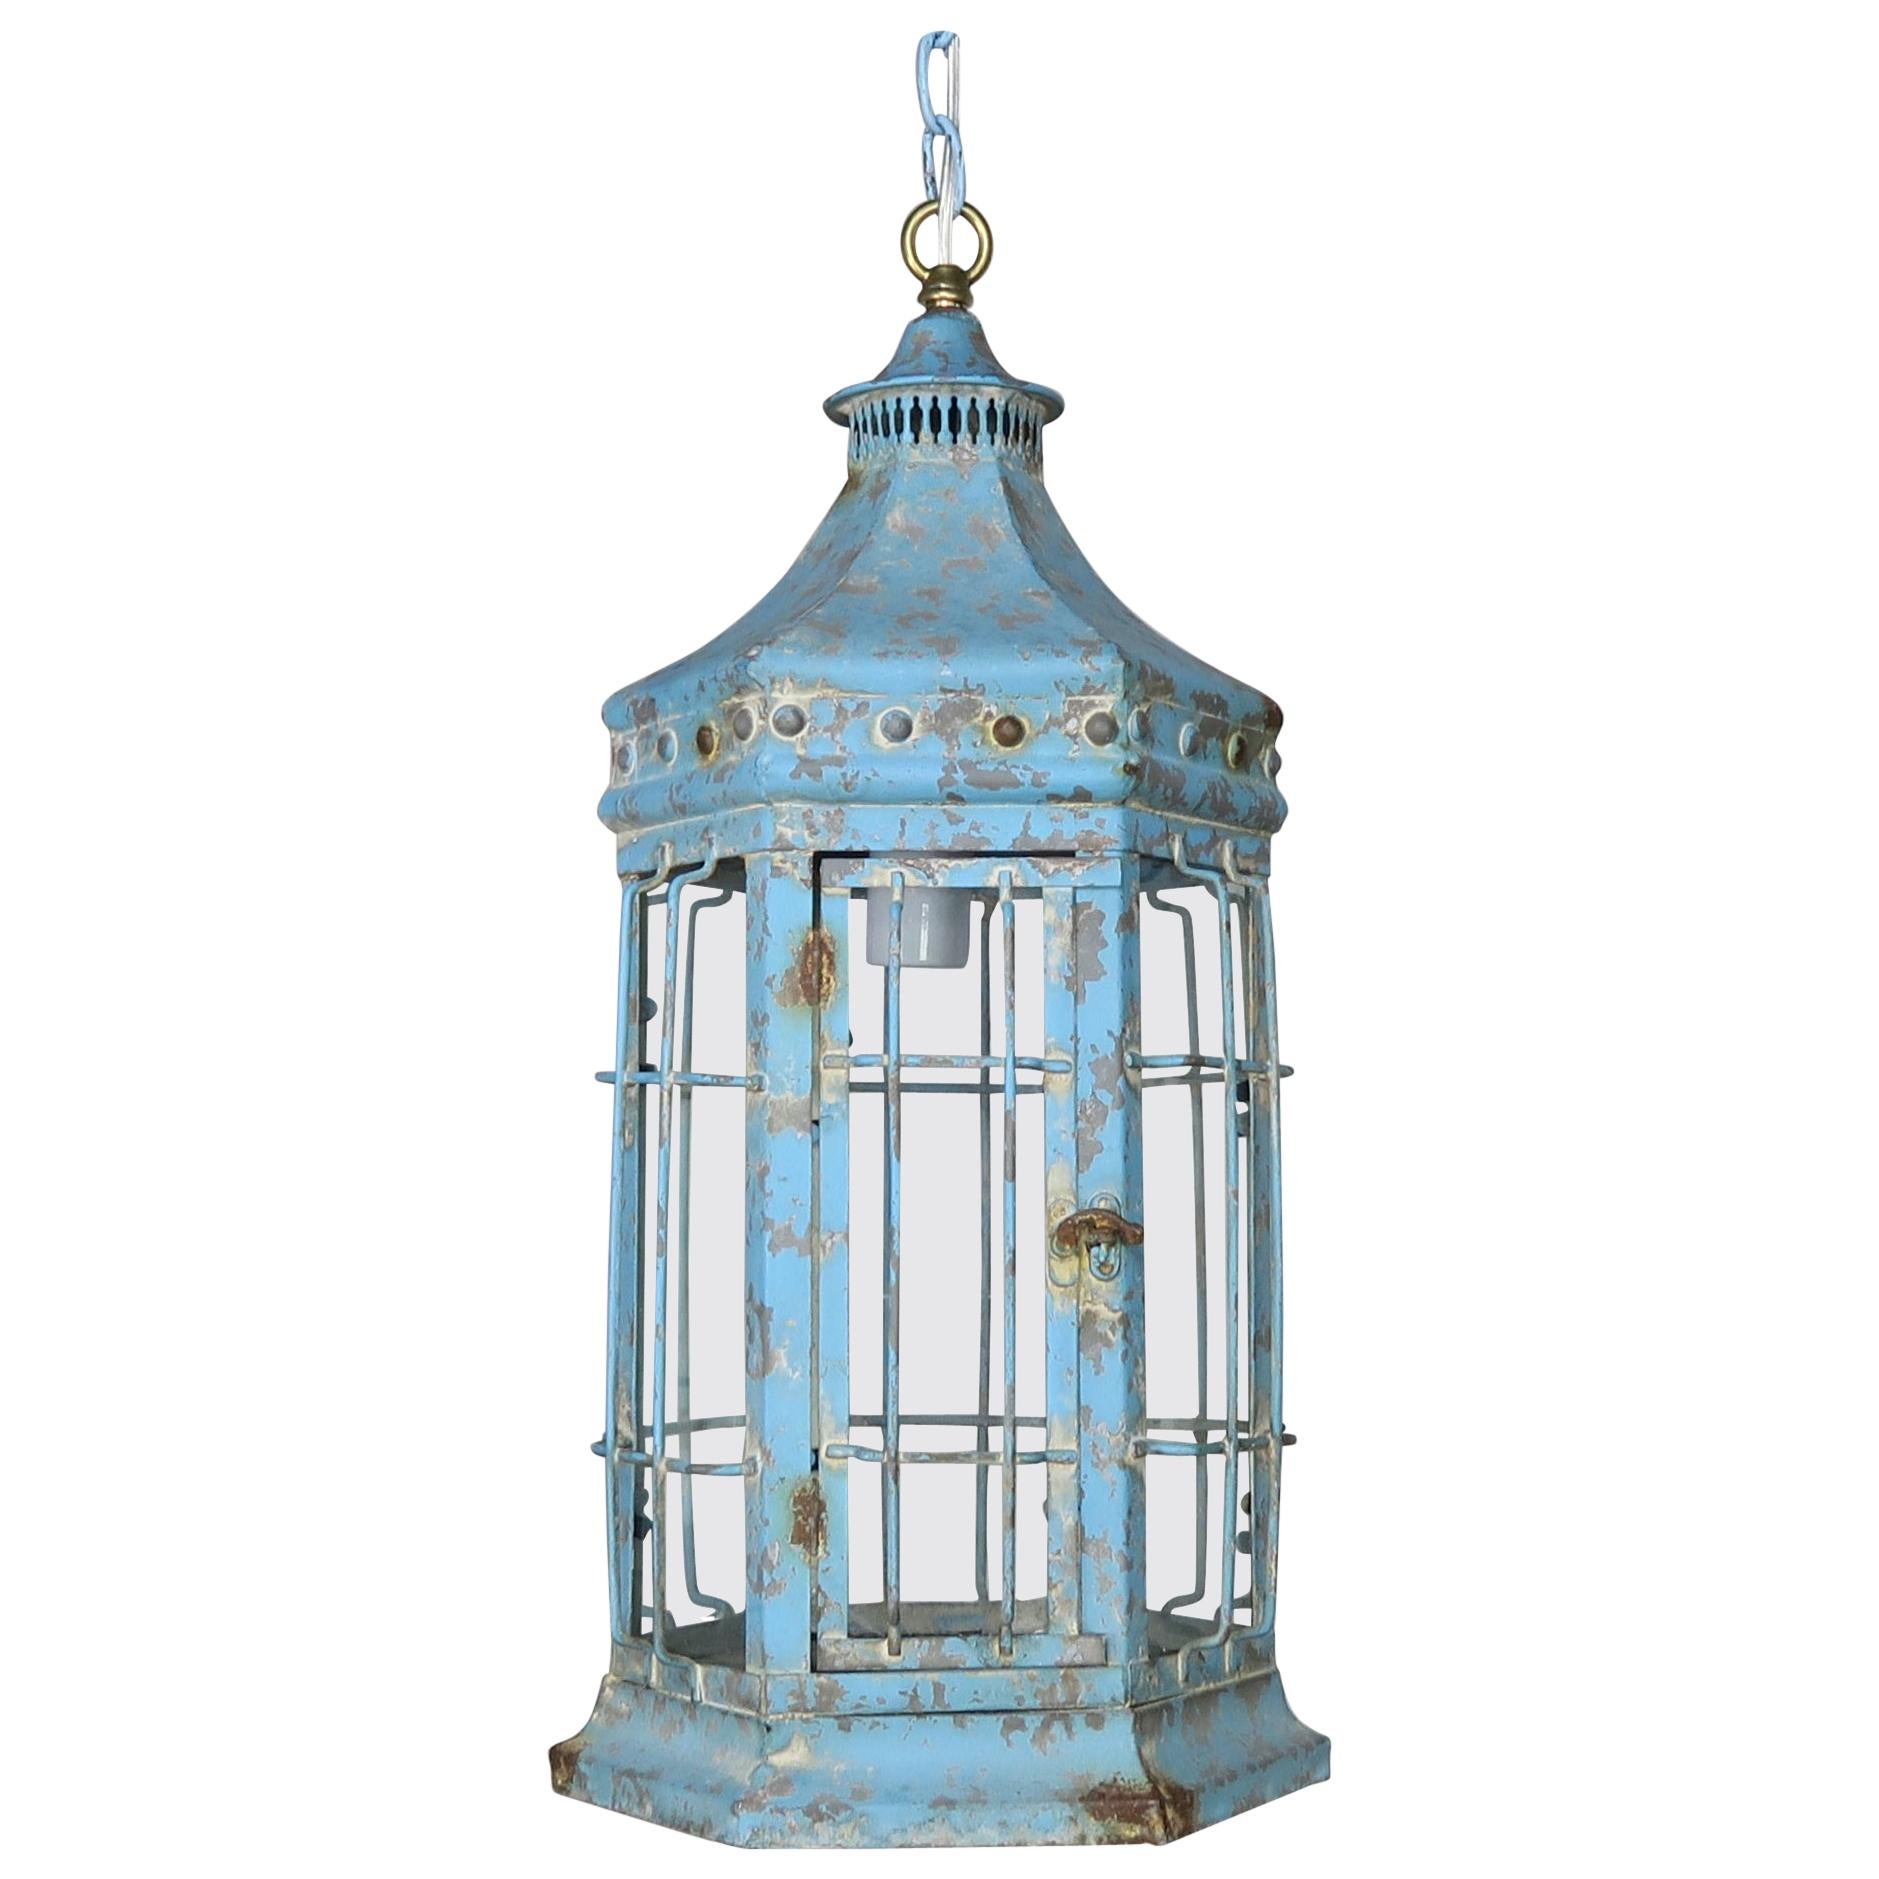 Blue Painted Pagoda Shaped Lantern with Original Glass